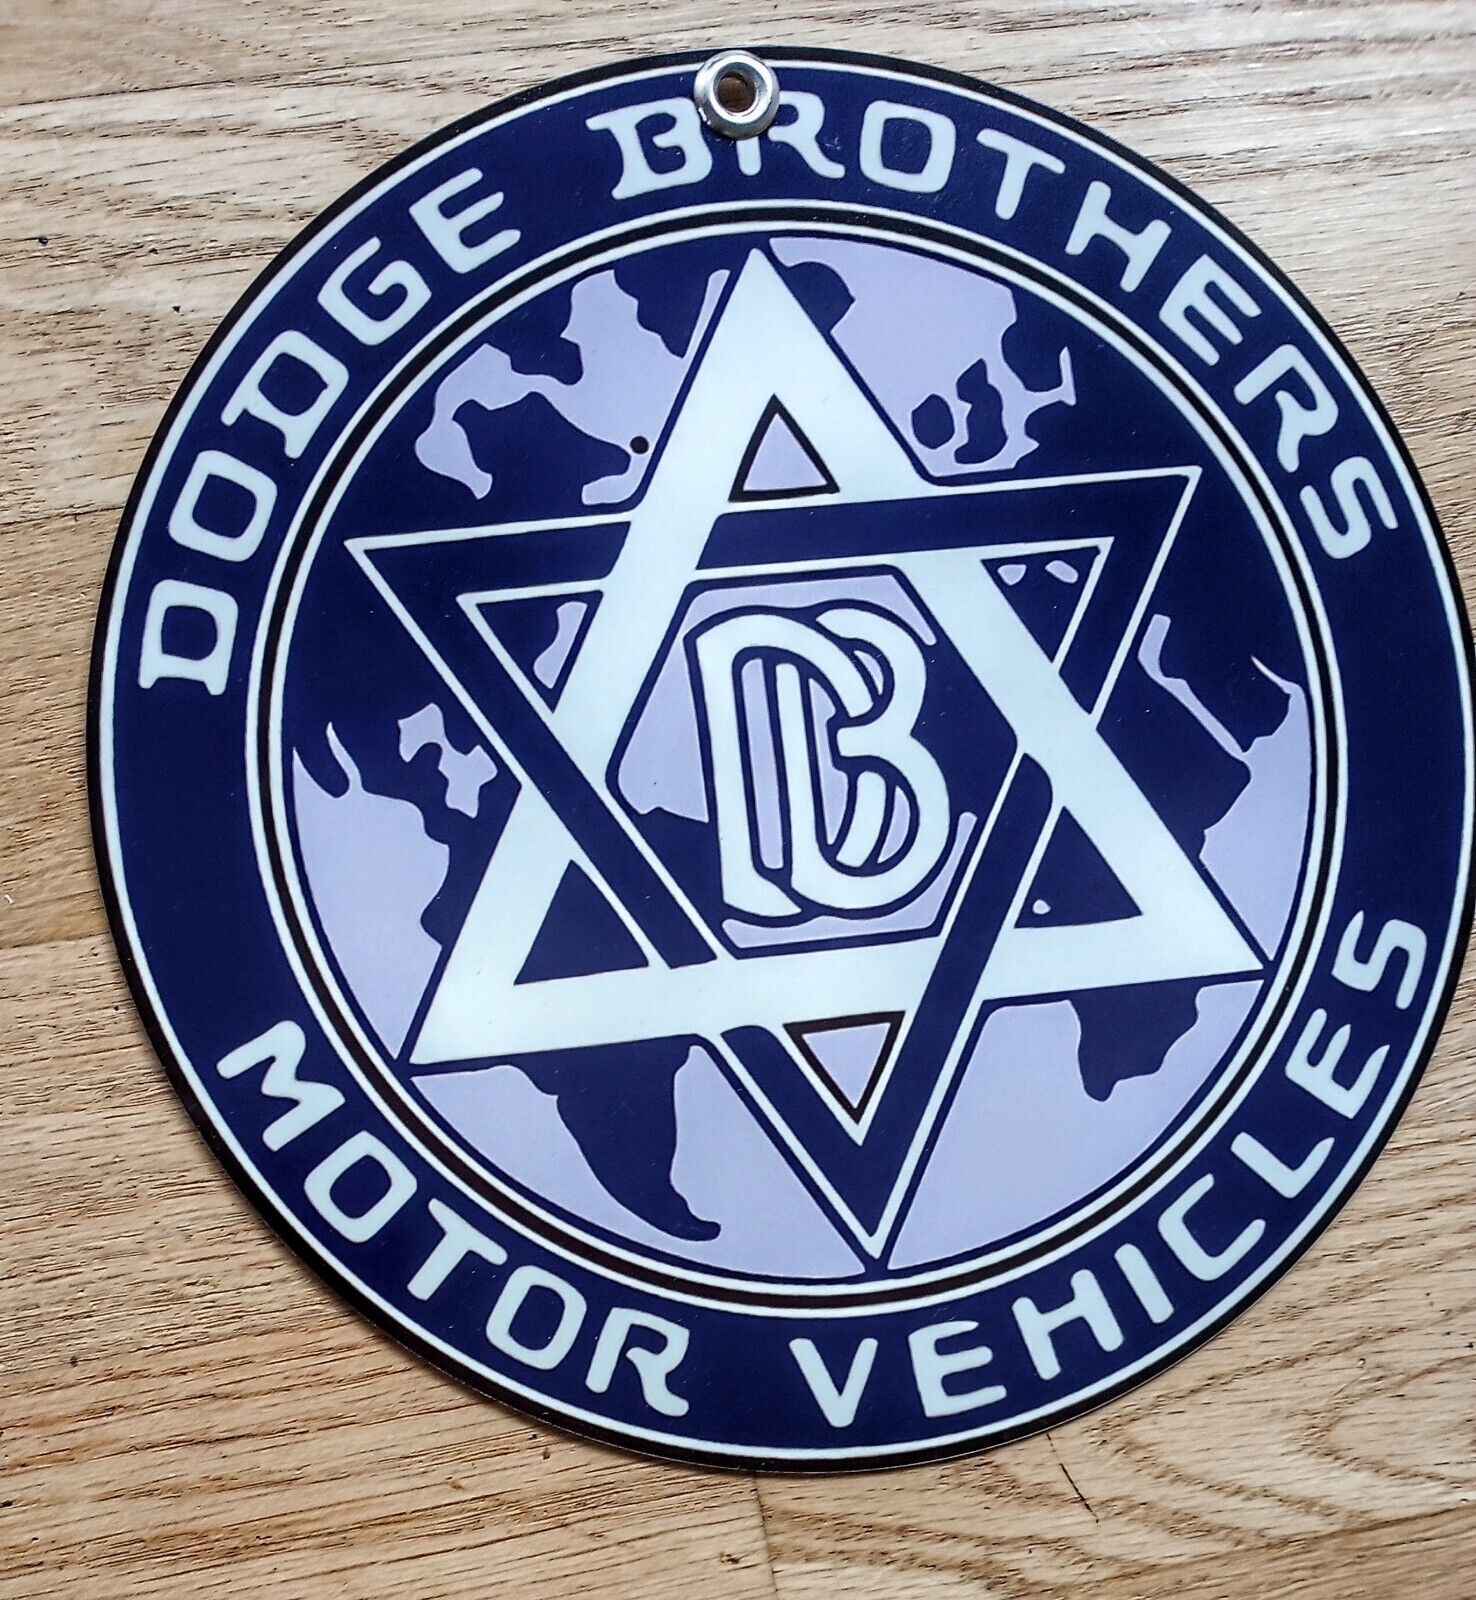 Dodge Brothers vintage Style logo sign